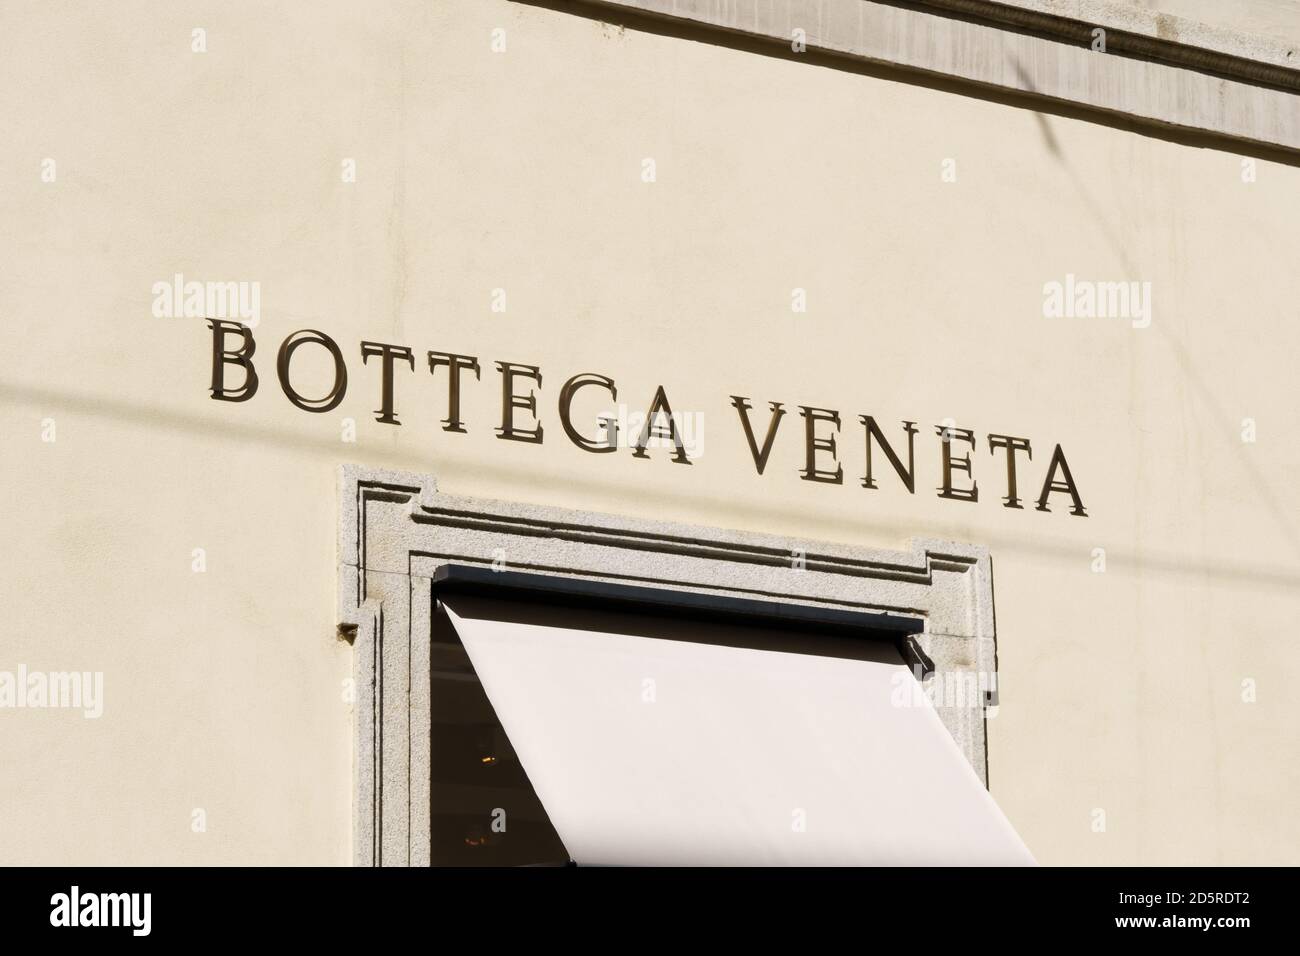 Bottega Veneta Brand - An innovative Italian designer brand - Life in Italy